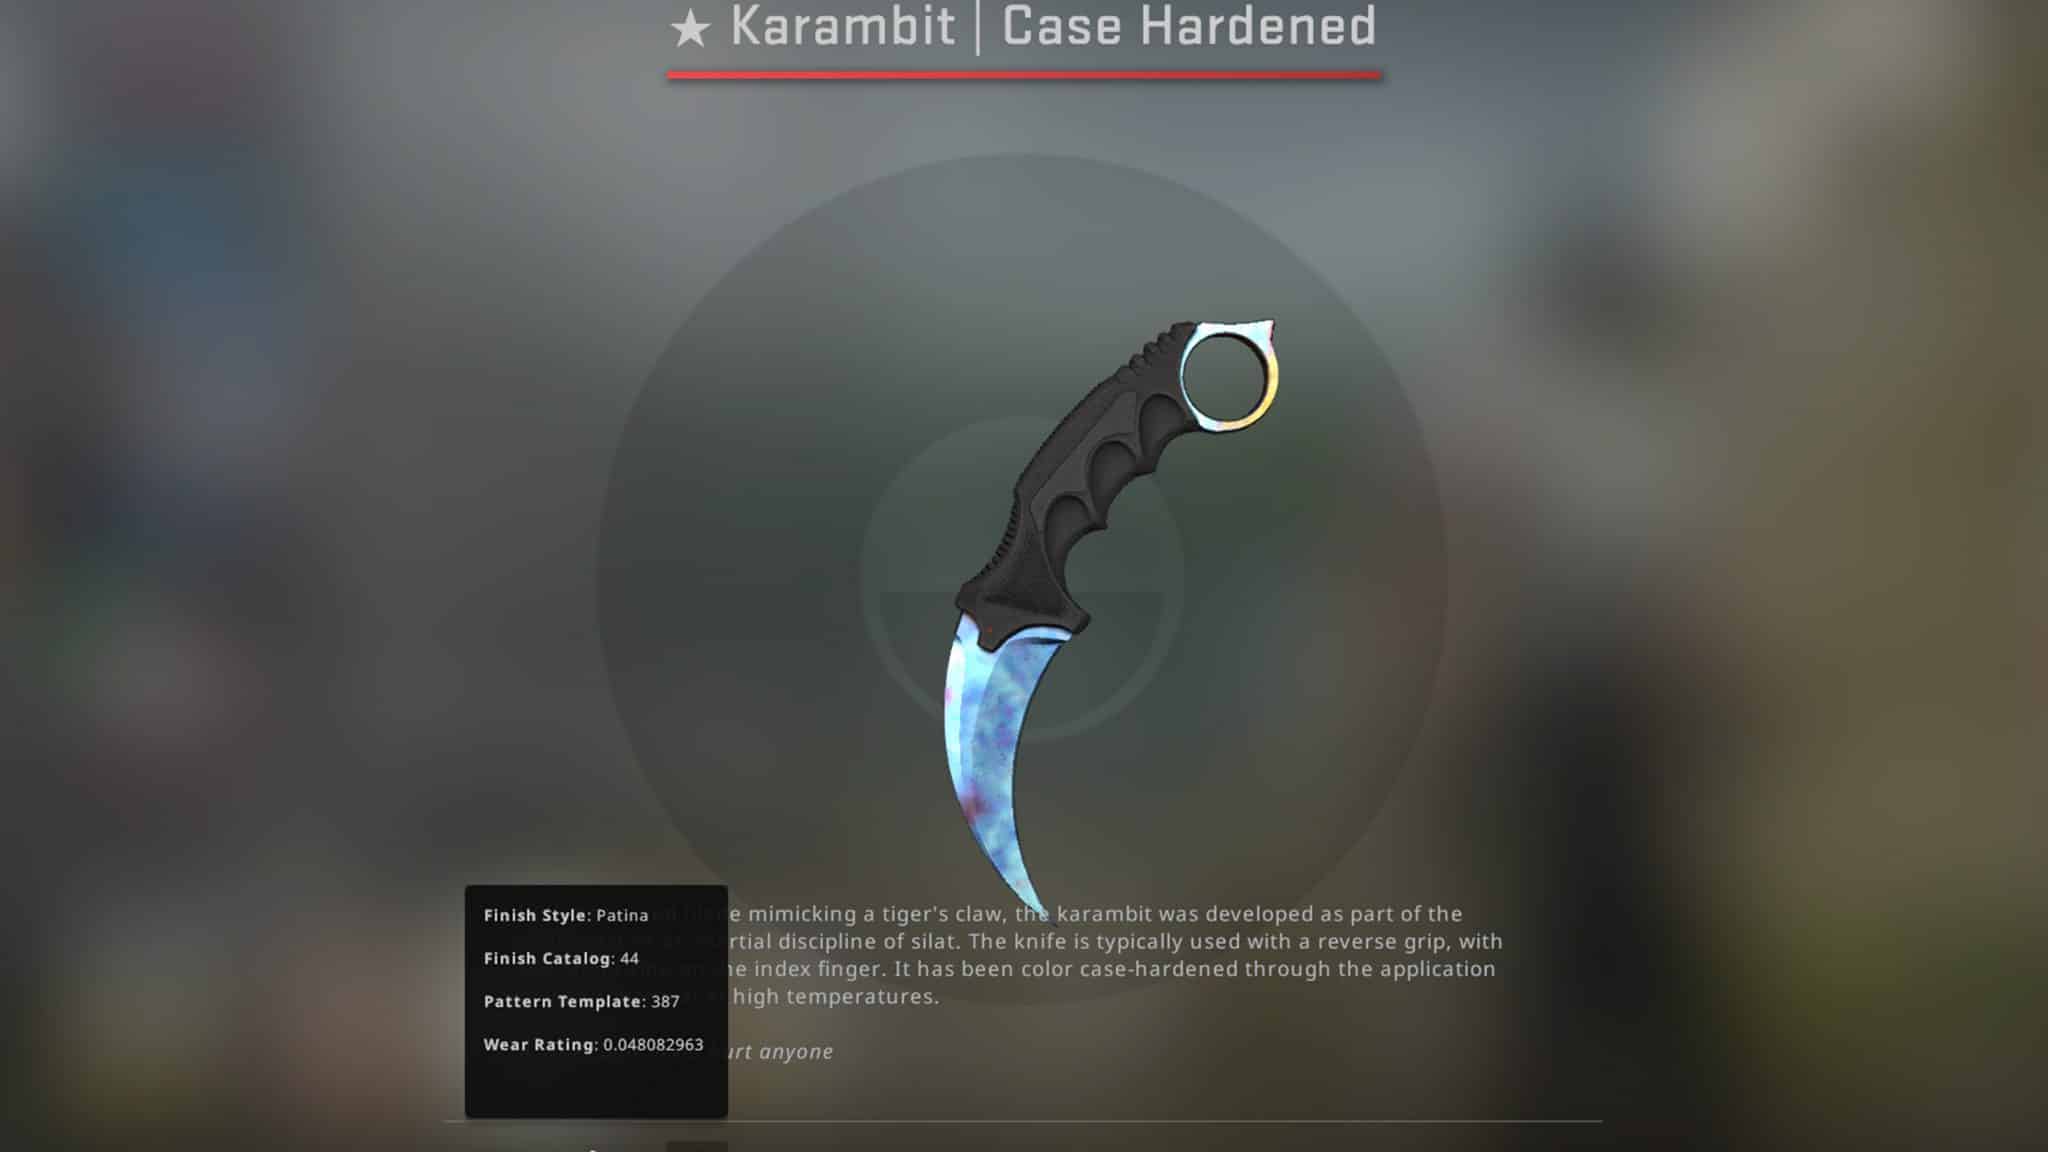 Counter-Strike case hardened karambit knife